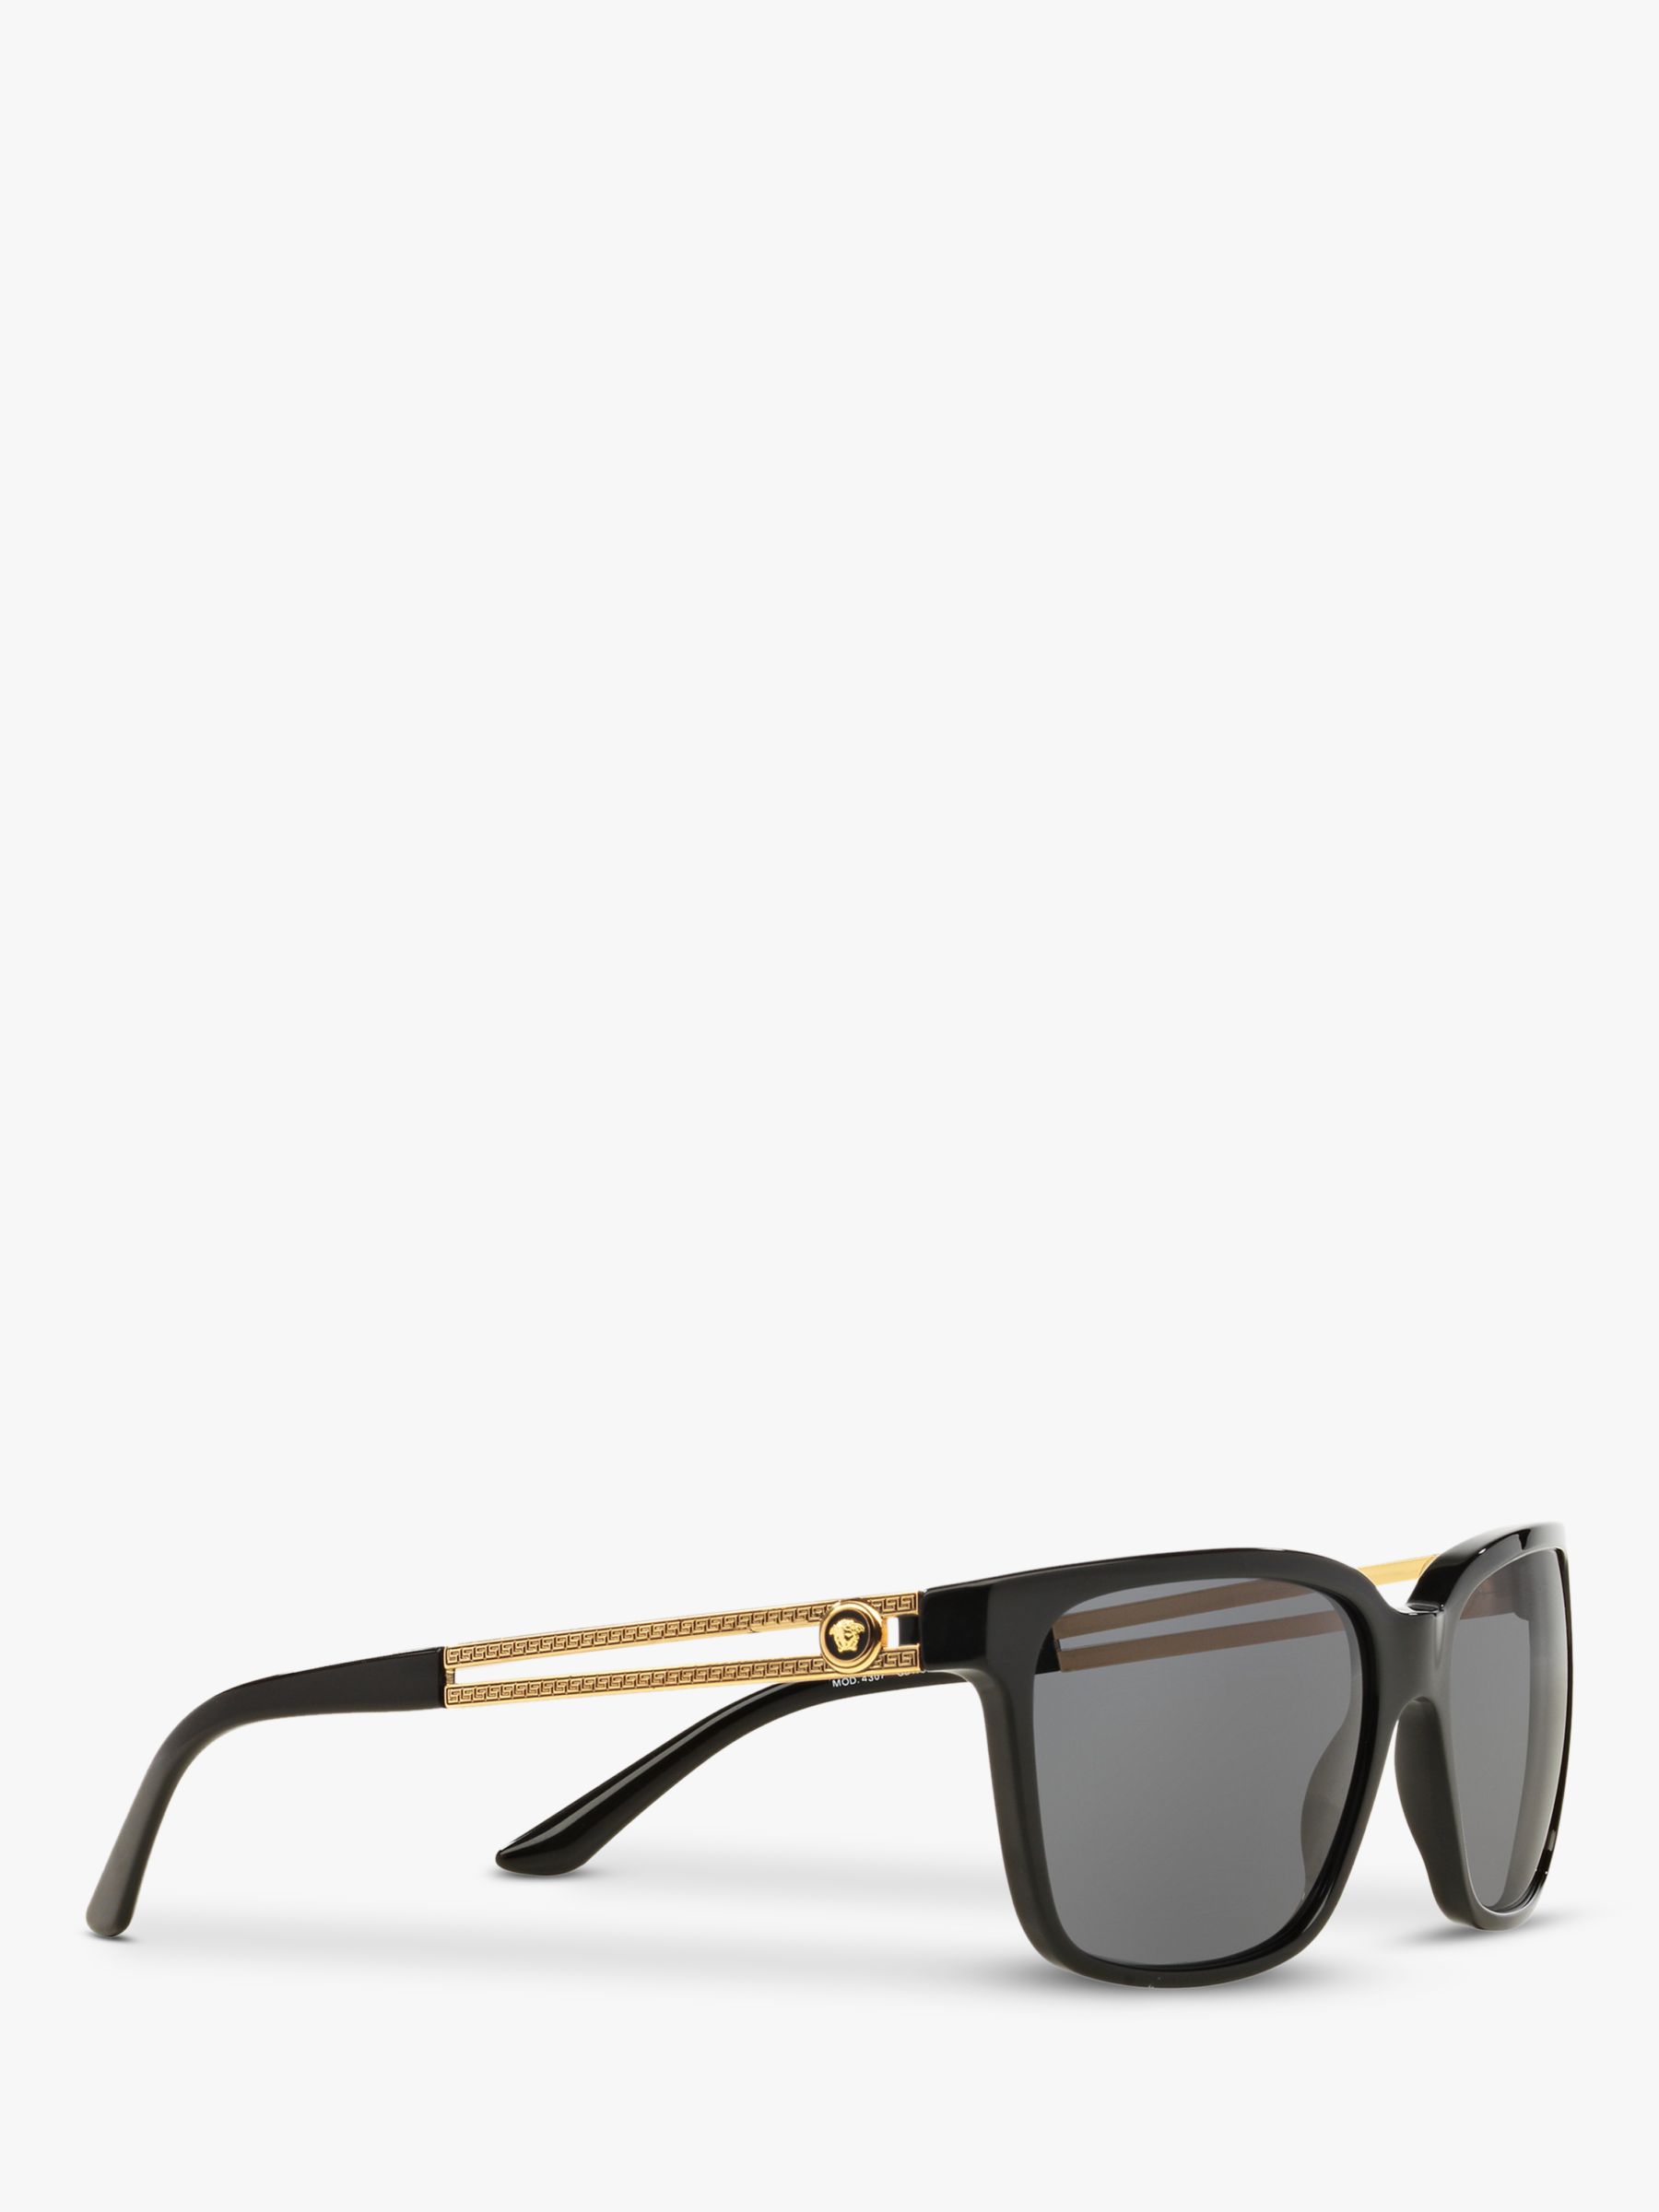 Buy Versace VE4307 Men's Square Sunglasses, Black/Grey Online at johnlewis.com